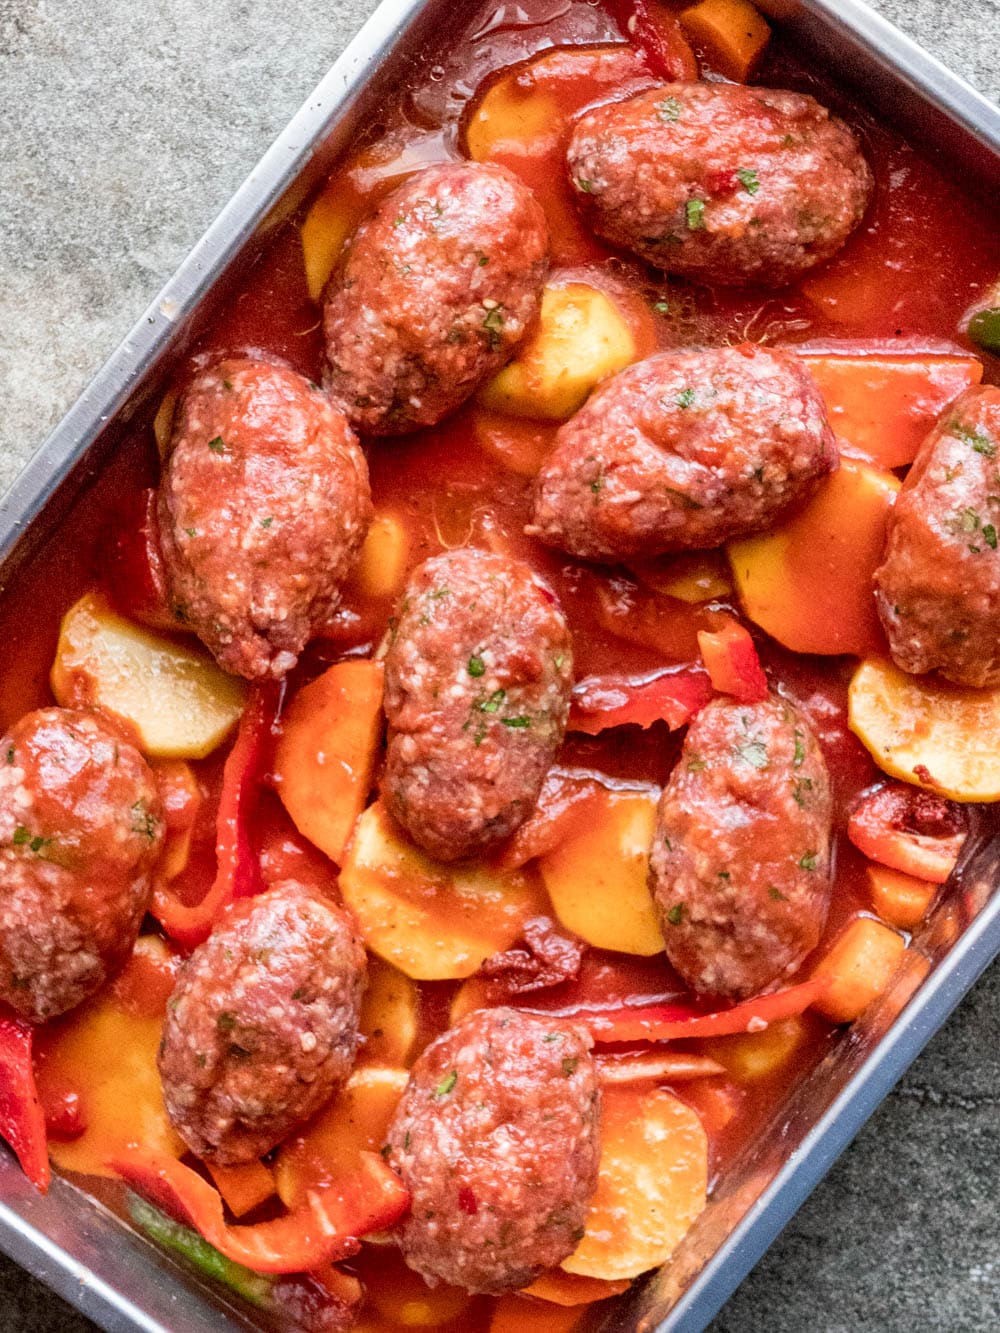 İzmir köfte (Turkish meatballs with potato and tomato sauce) - recipe / A kitchen in Istanbul